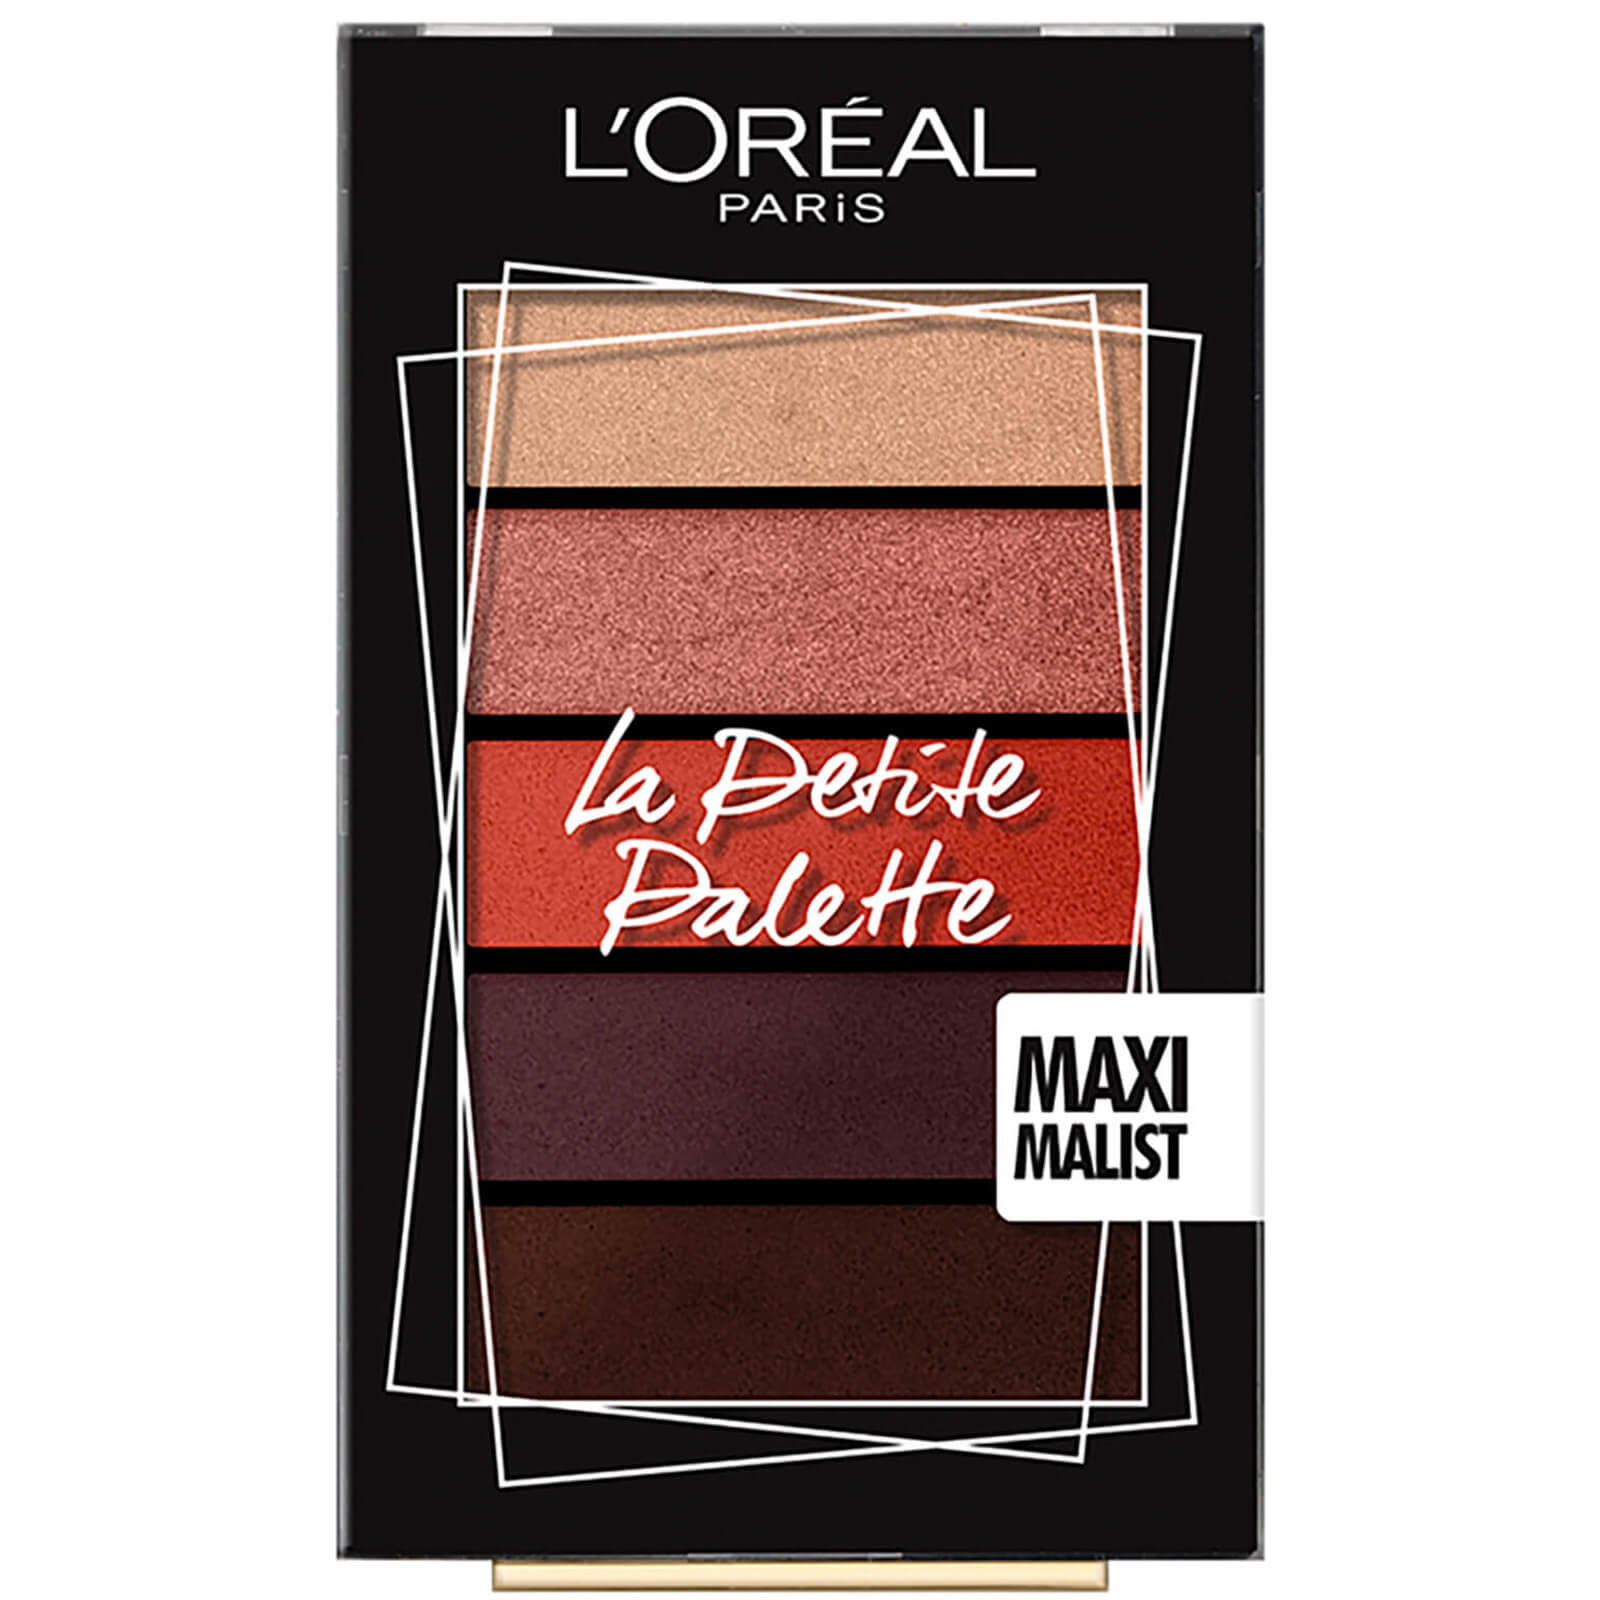 Minipaleta de sombra de ojos Mini Eyeshadow Palette de L’Oréal Paris - 01 Maximalist